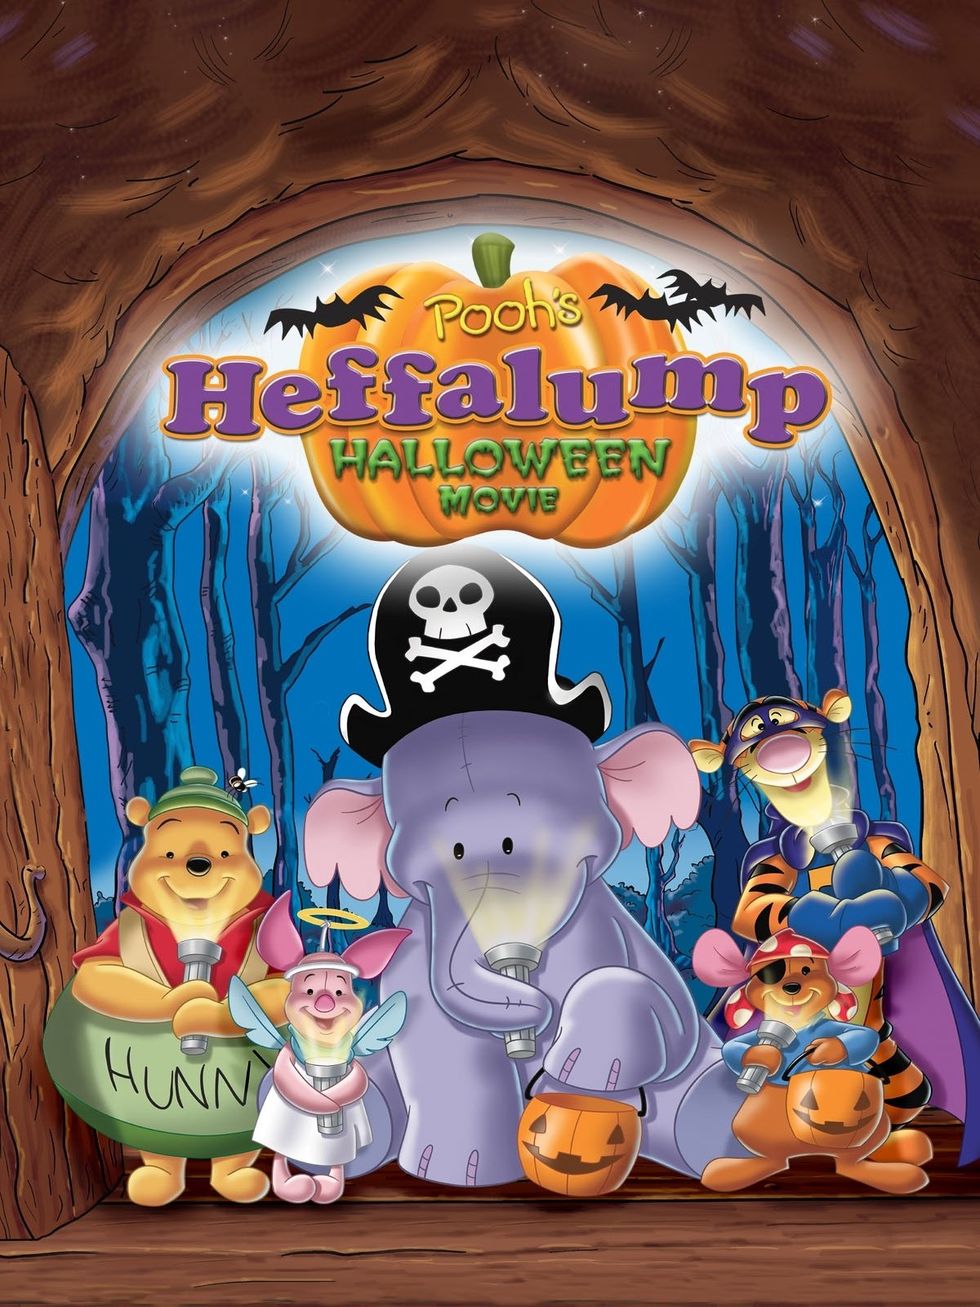 pooh's heffalump